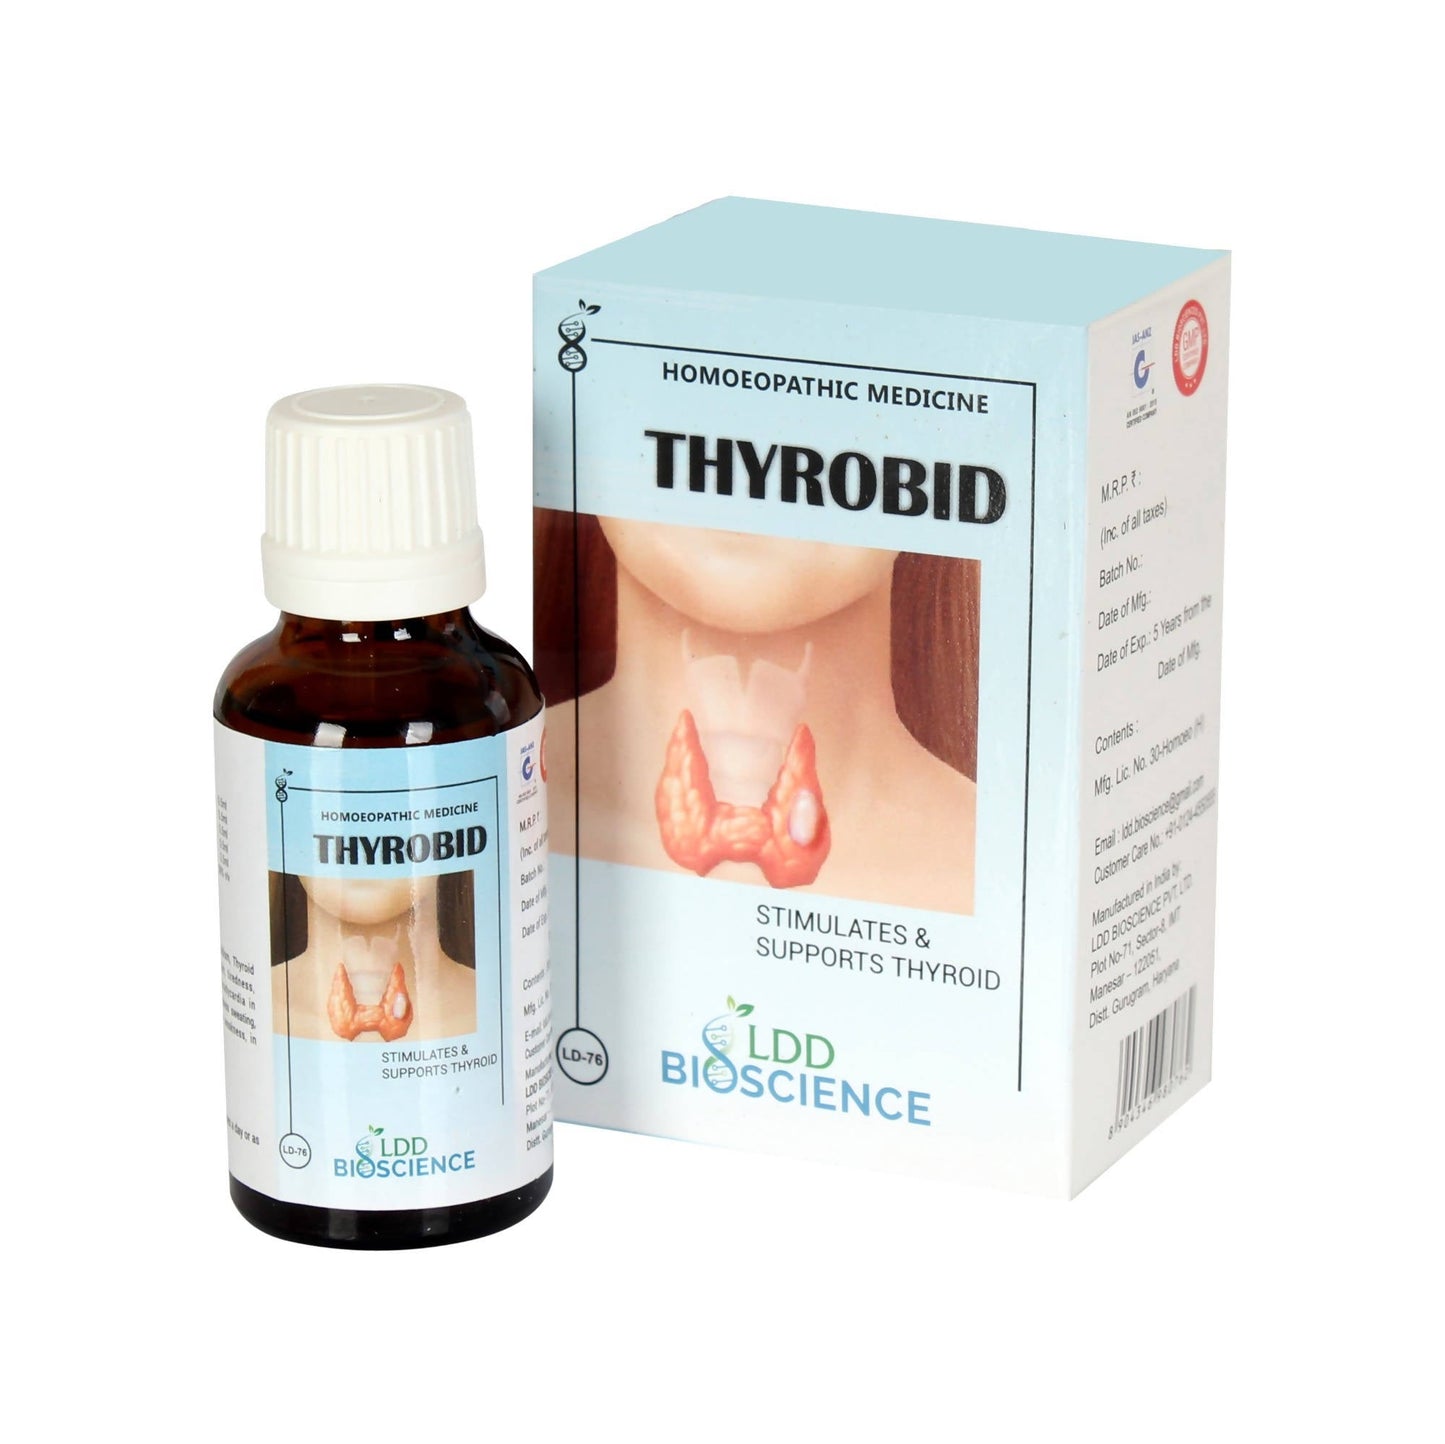 LDD Bioscience Homeopathy Thyrobid Drops